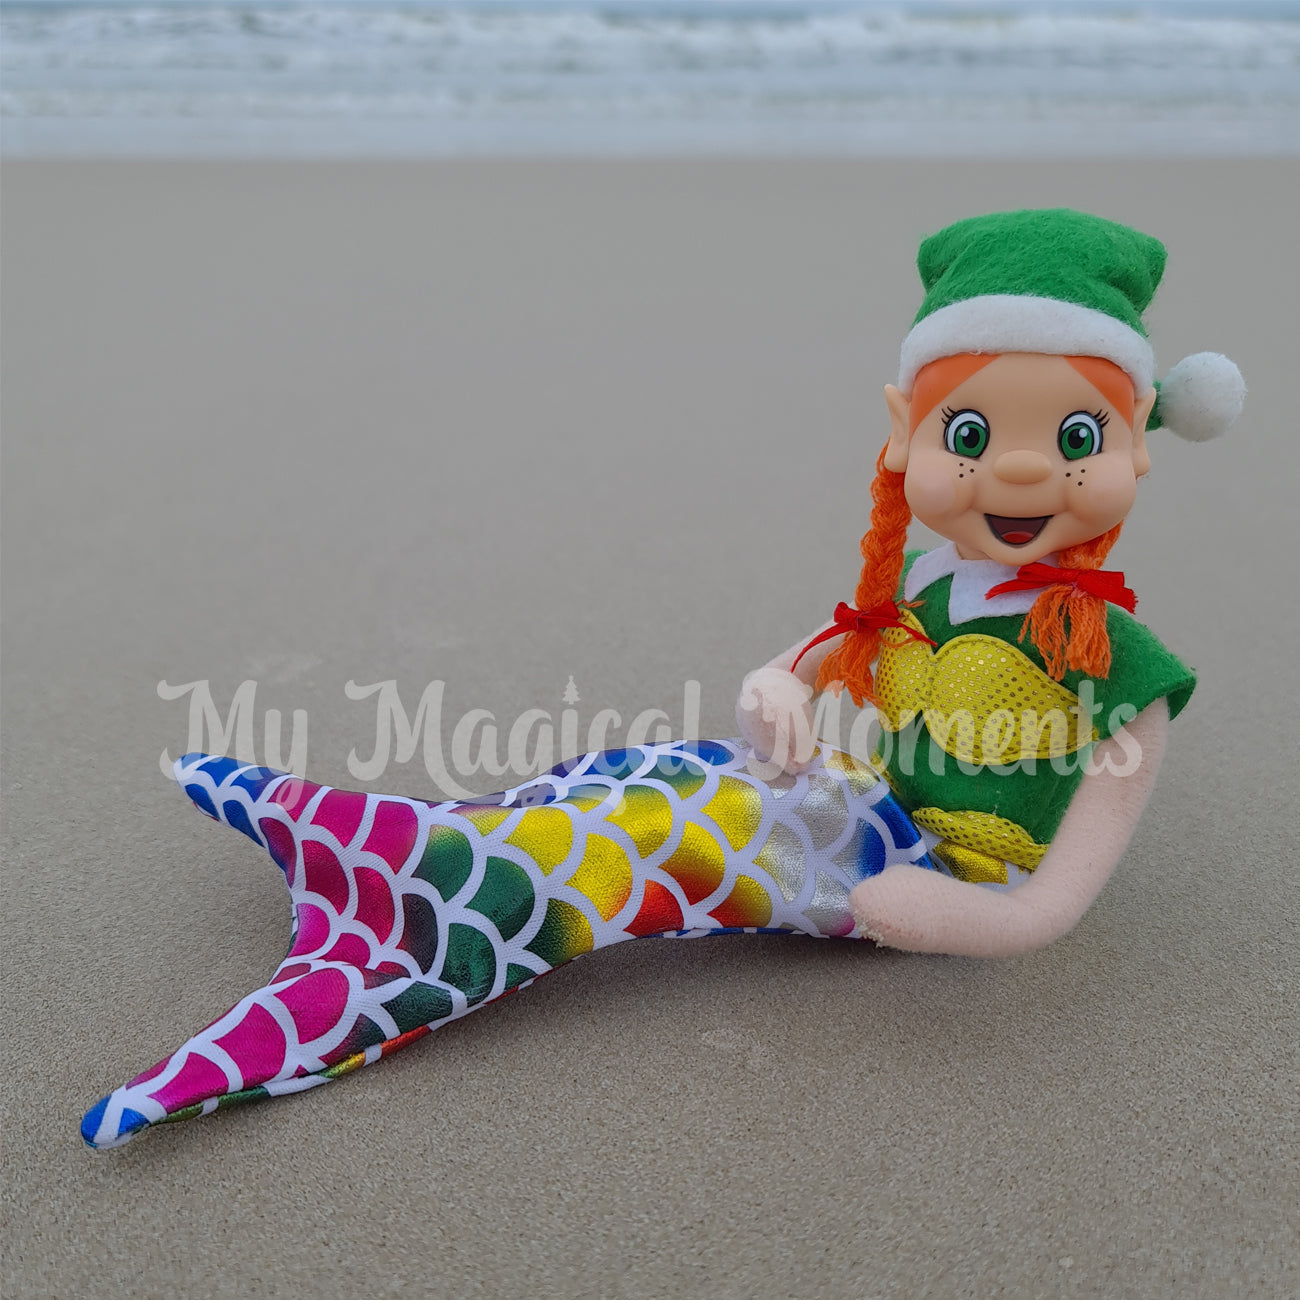 Elf wearing a mermaid dress up at the beach